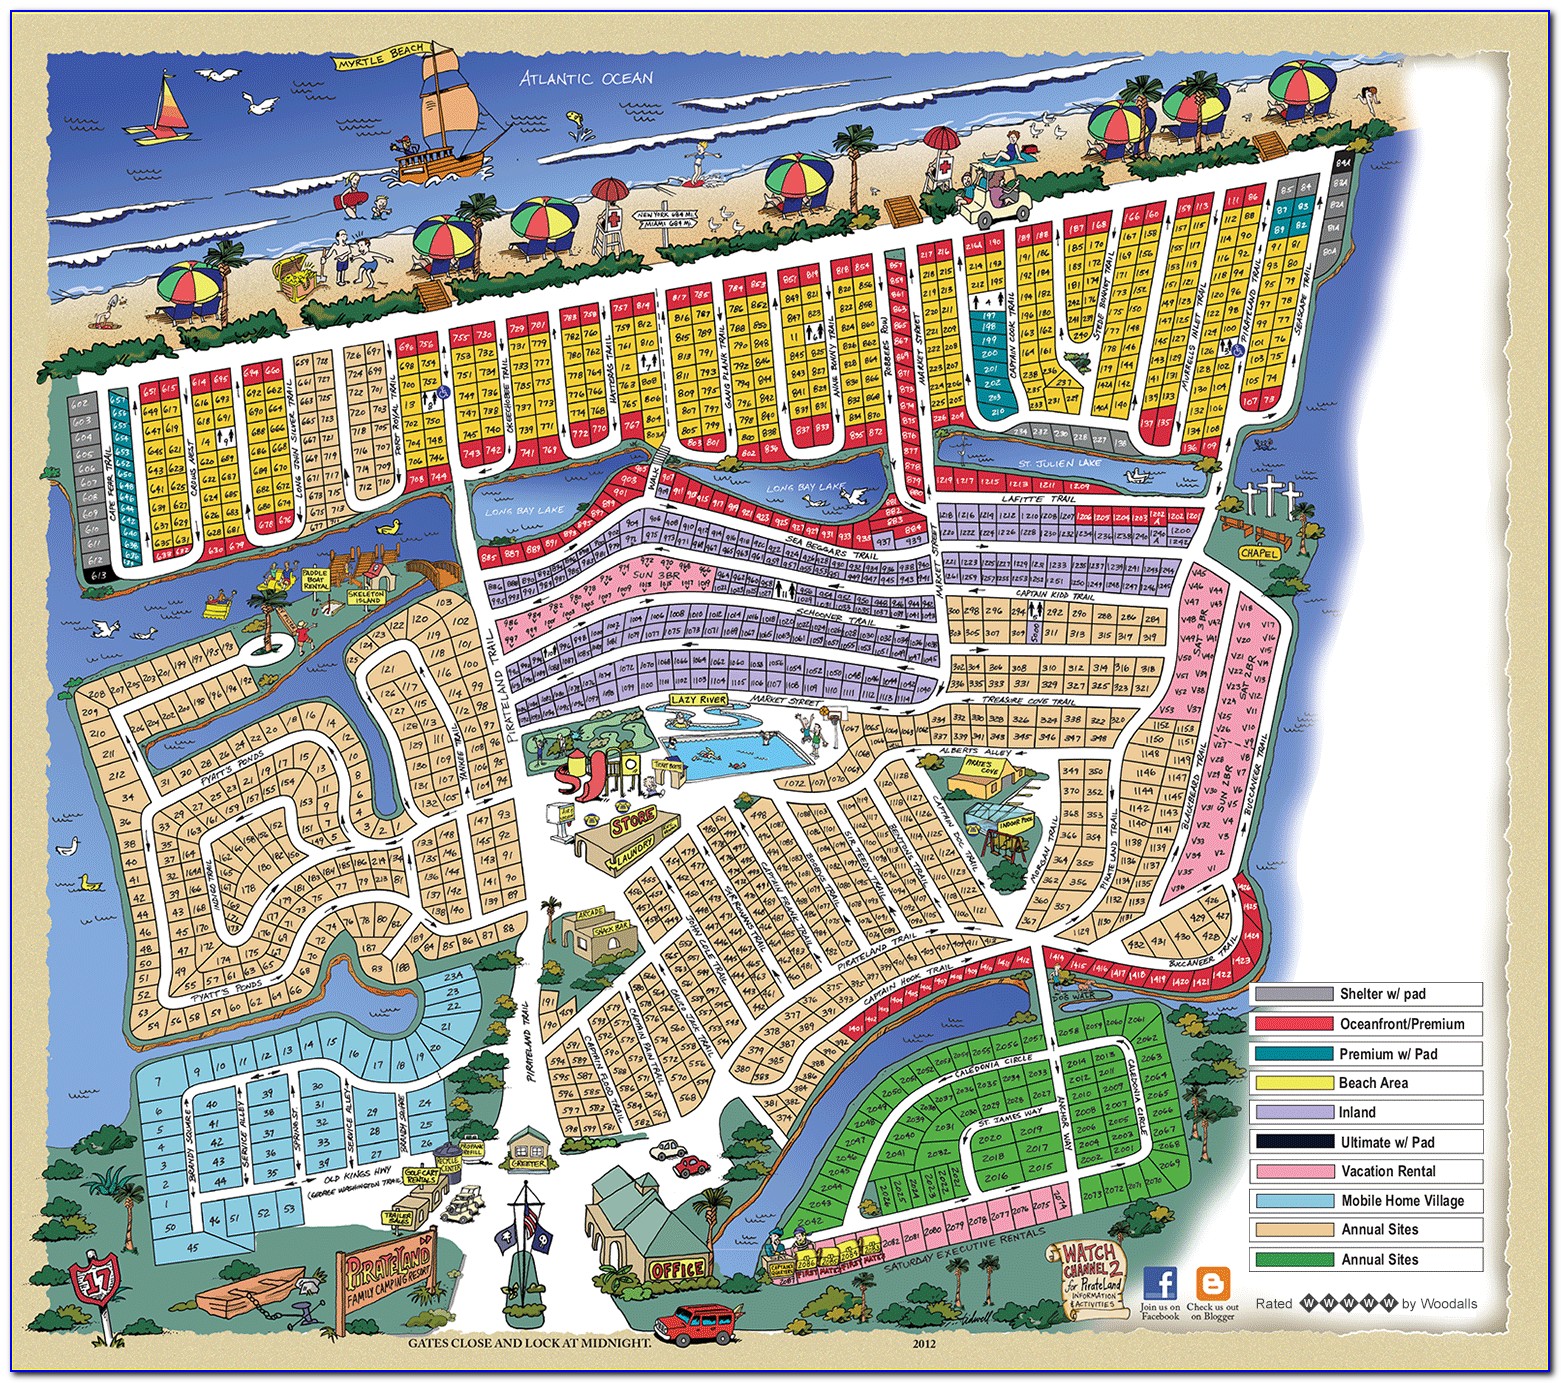 Myrtle Beach Grand Strand Hotel Map